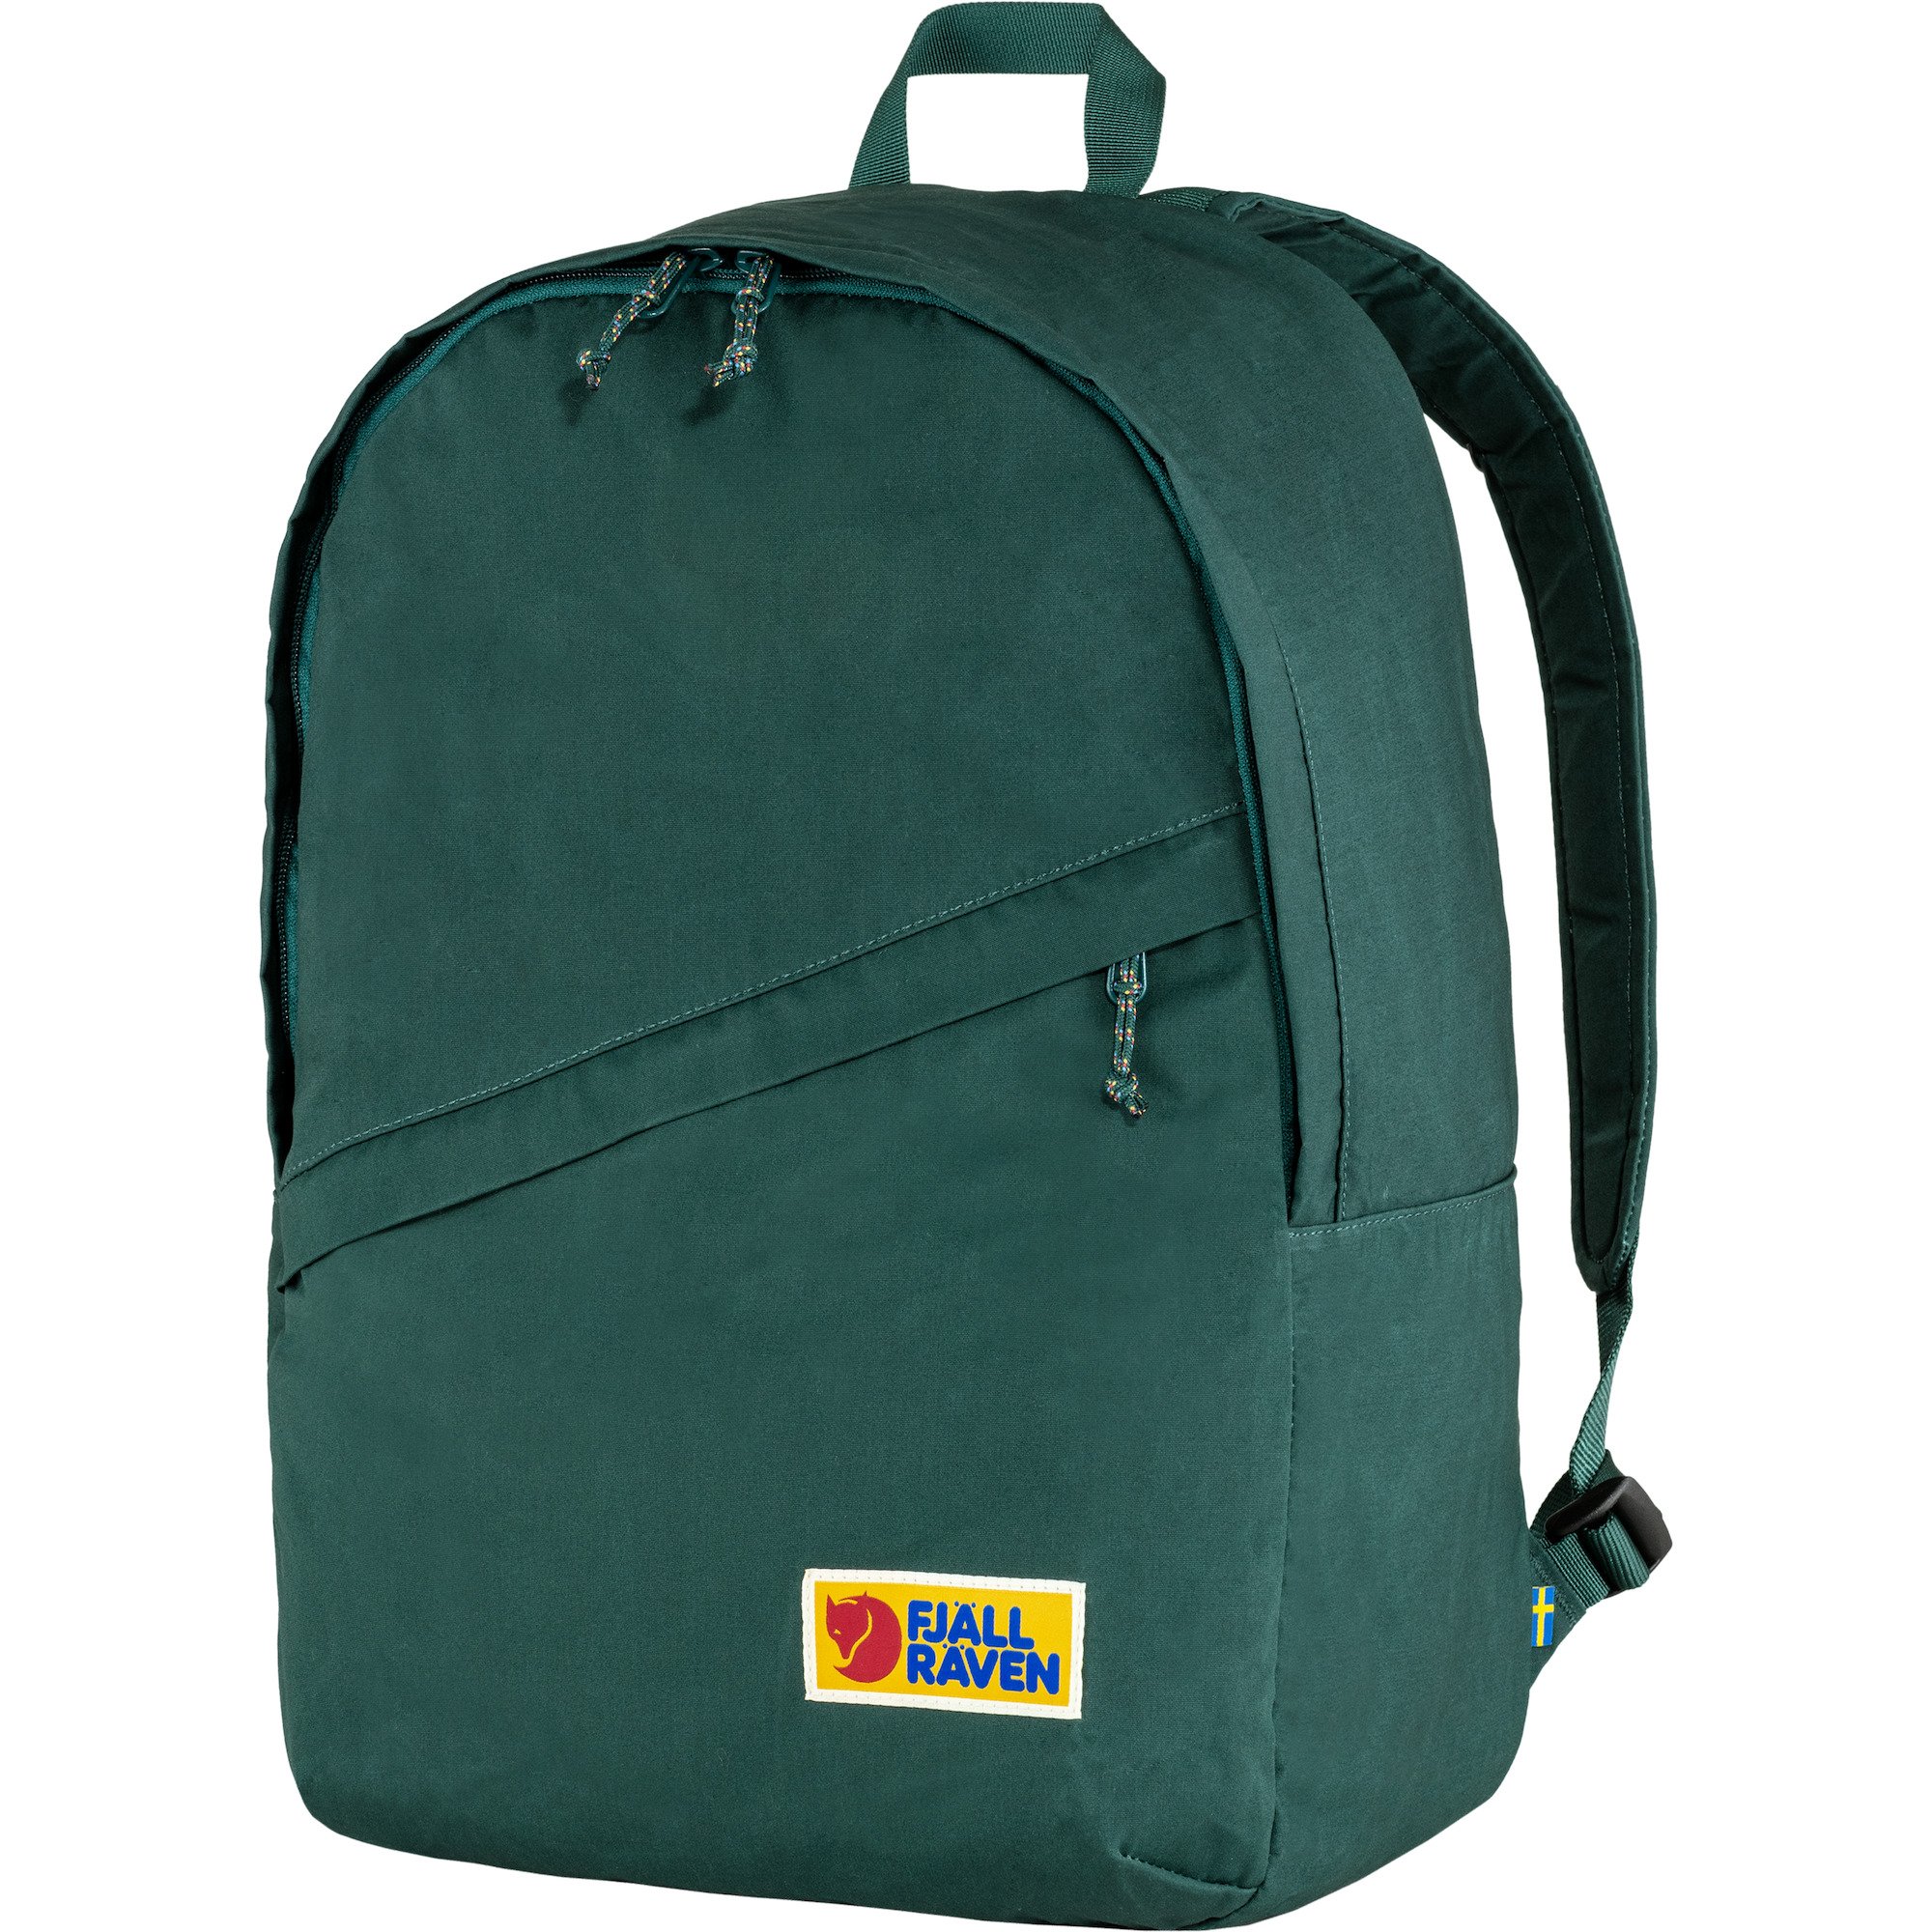 Fjällräven Vardag 25 Tagesrucksack grün Rucksack Tasche Backpack Outdoor Daypack 